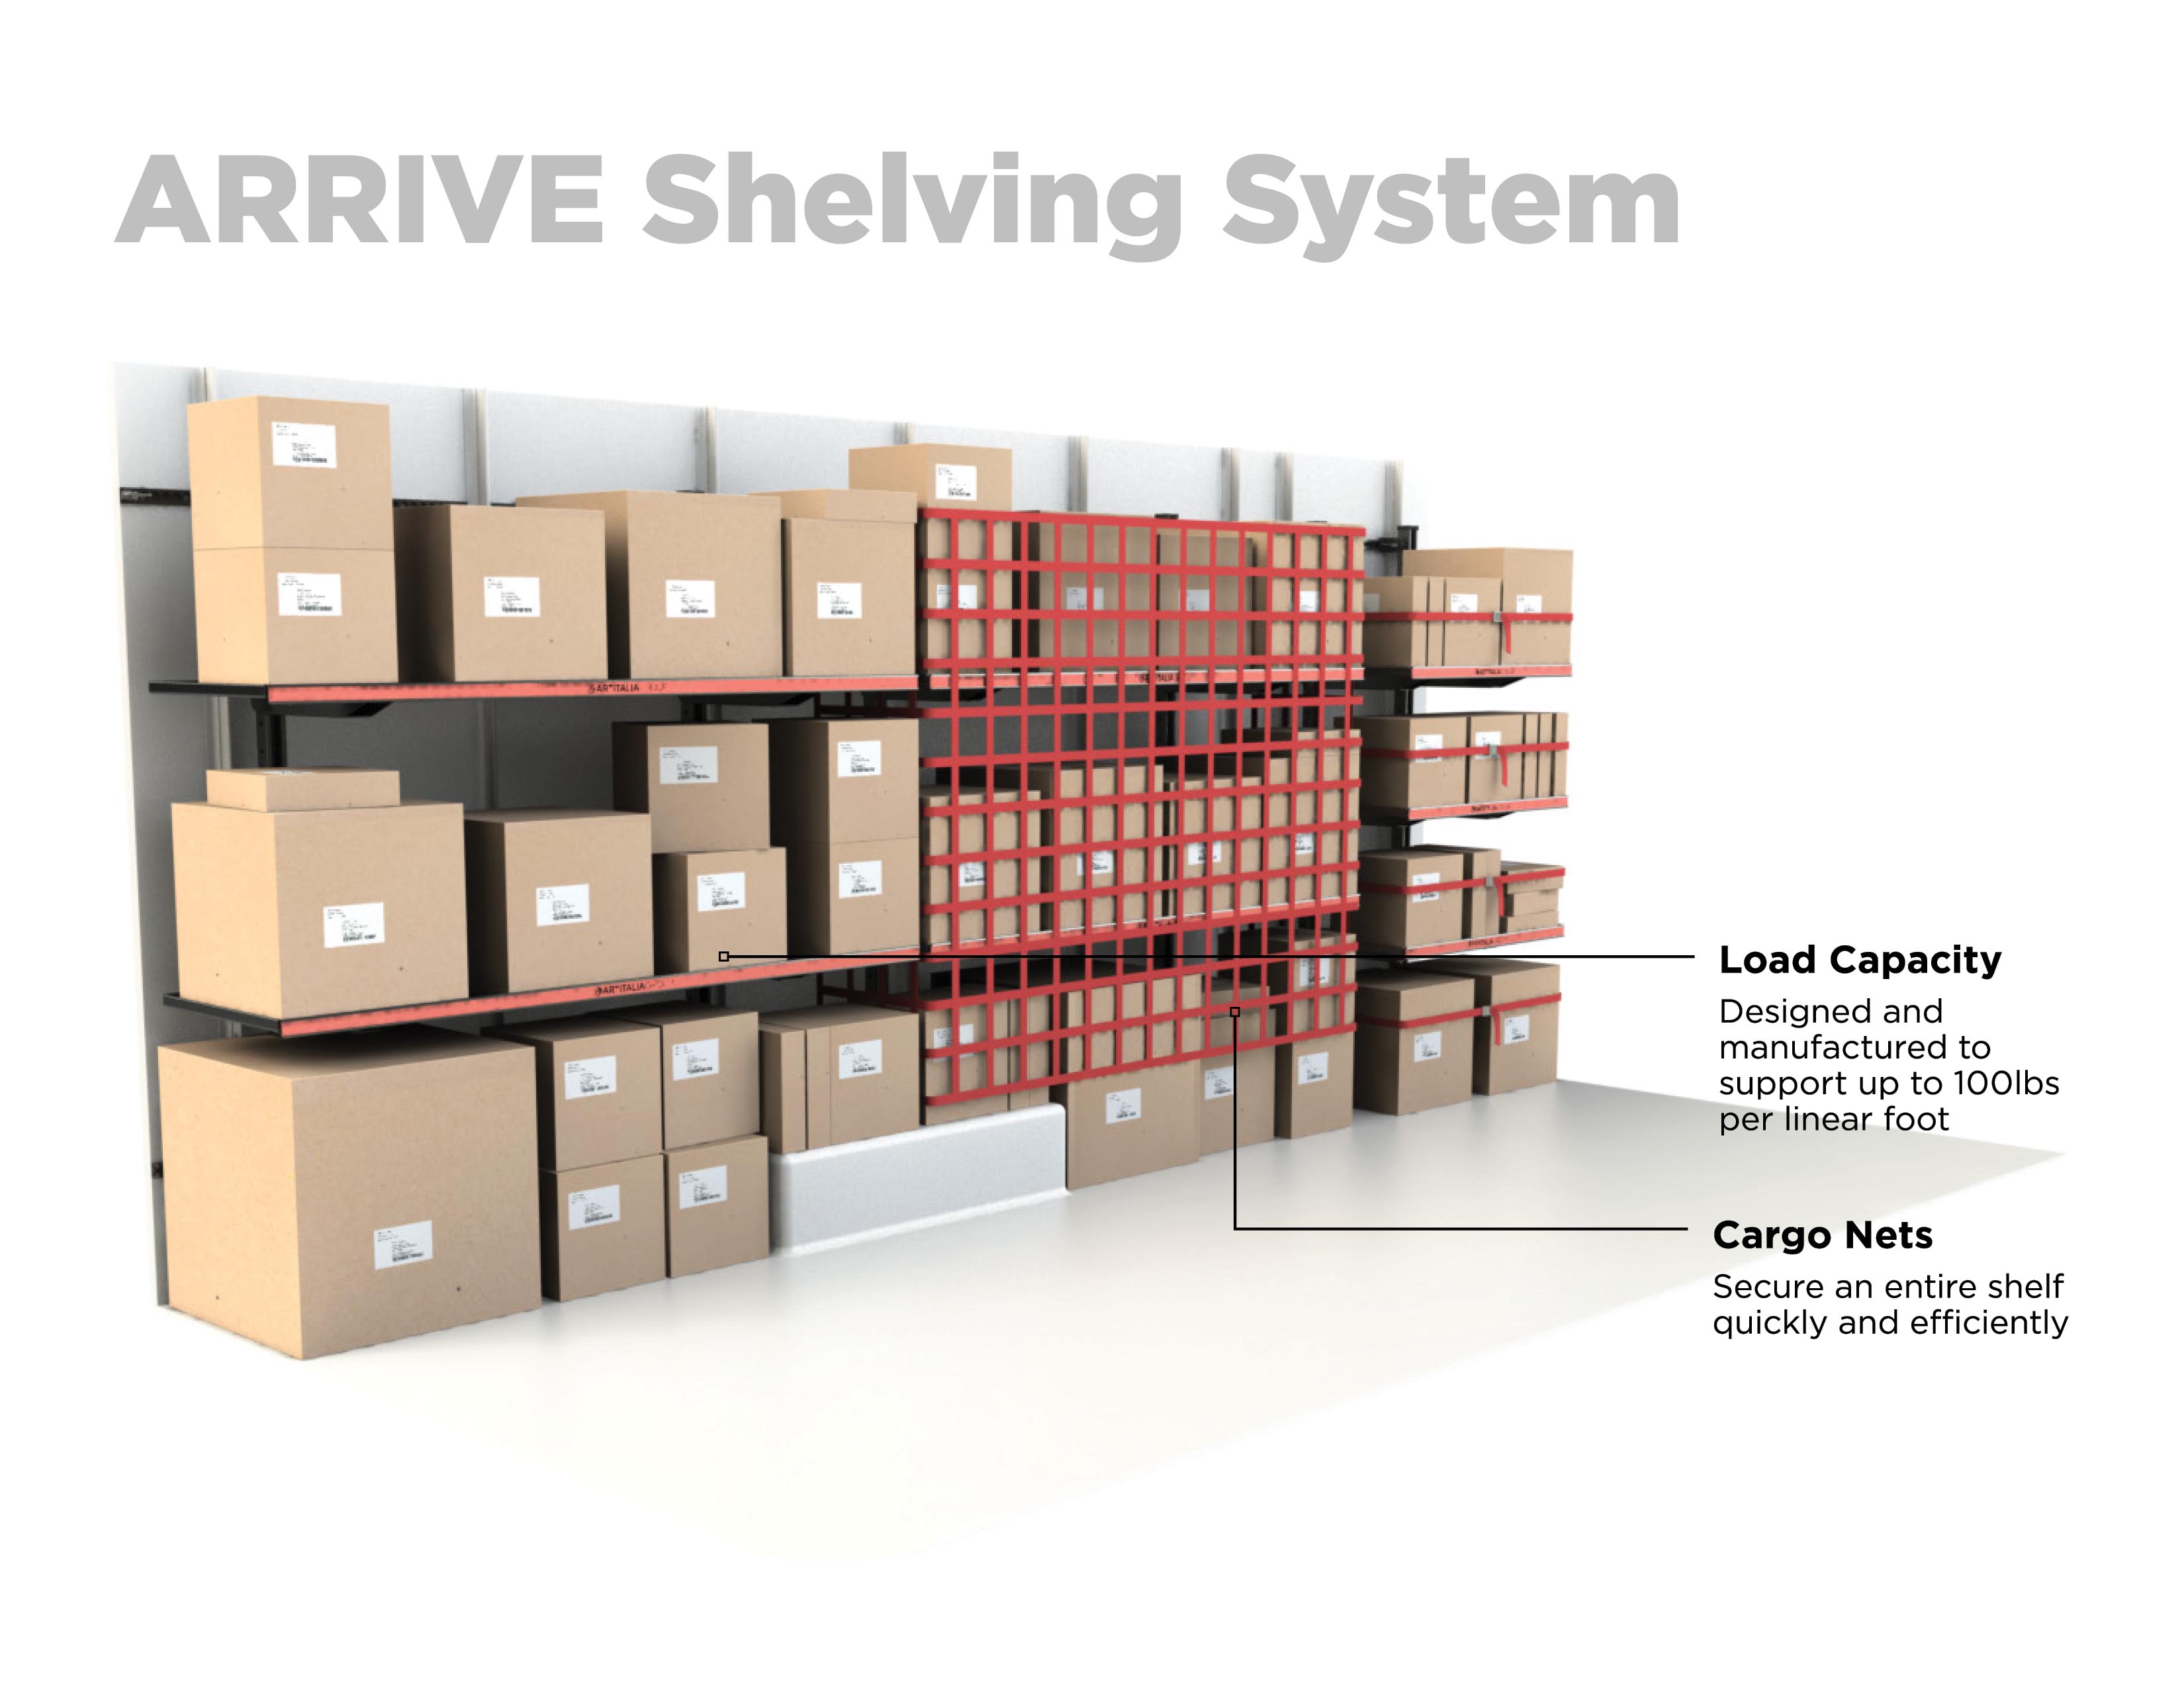 Arrive Shelving System - Material Handling Solutions - Material Handling Equipment - Material Handling - Shipping and Handling - Shelving System